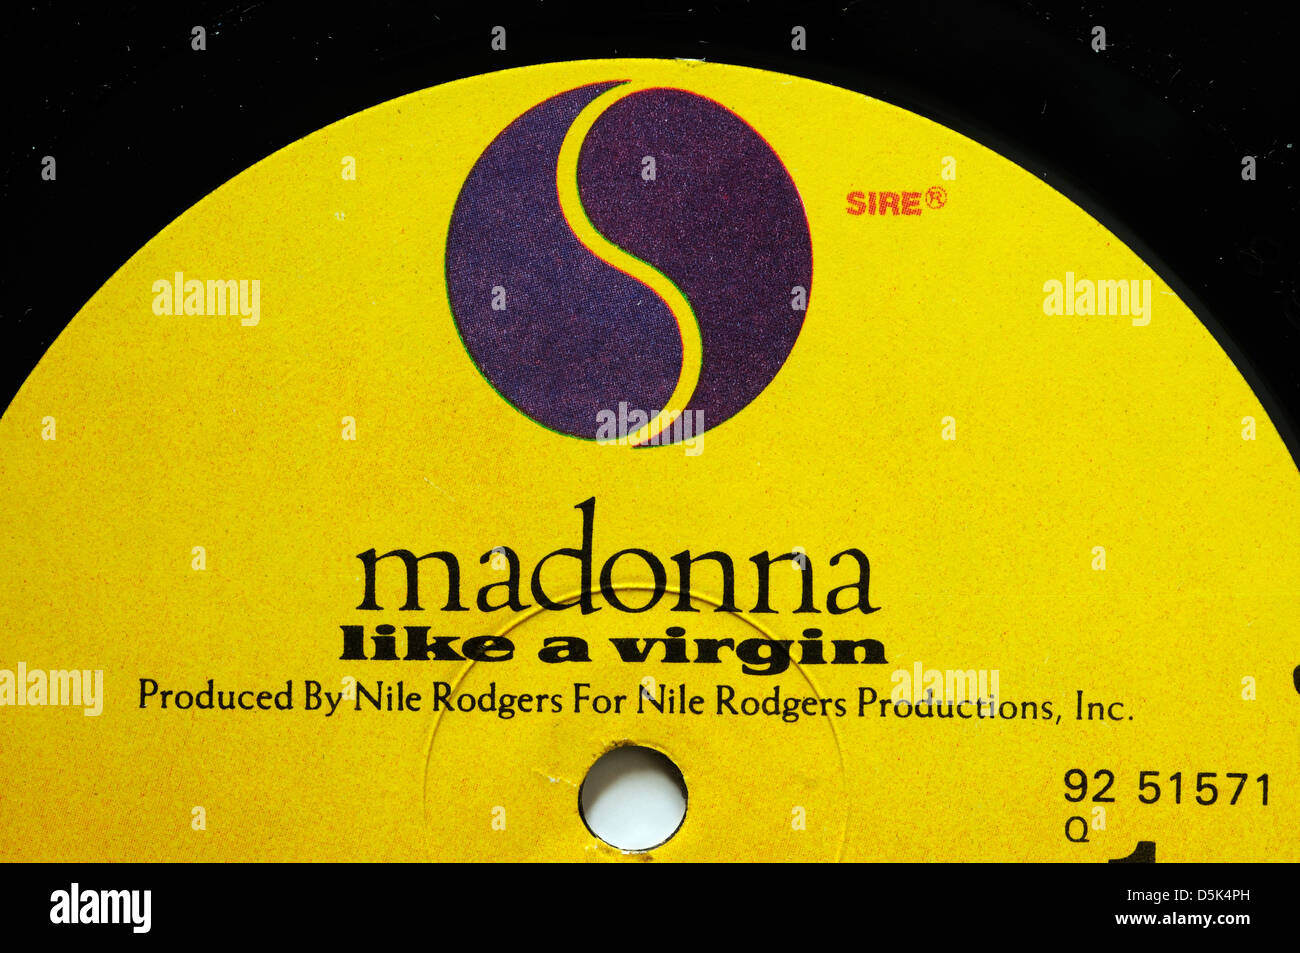 Madonna Like a Virgin record label Stock Photo - Alamy